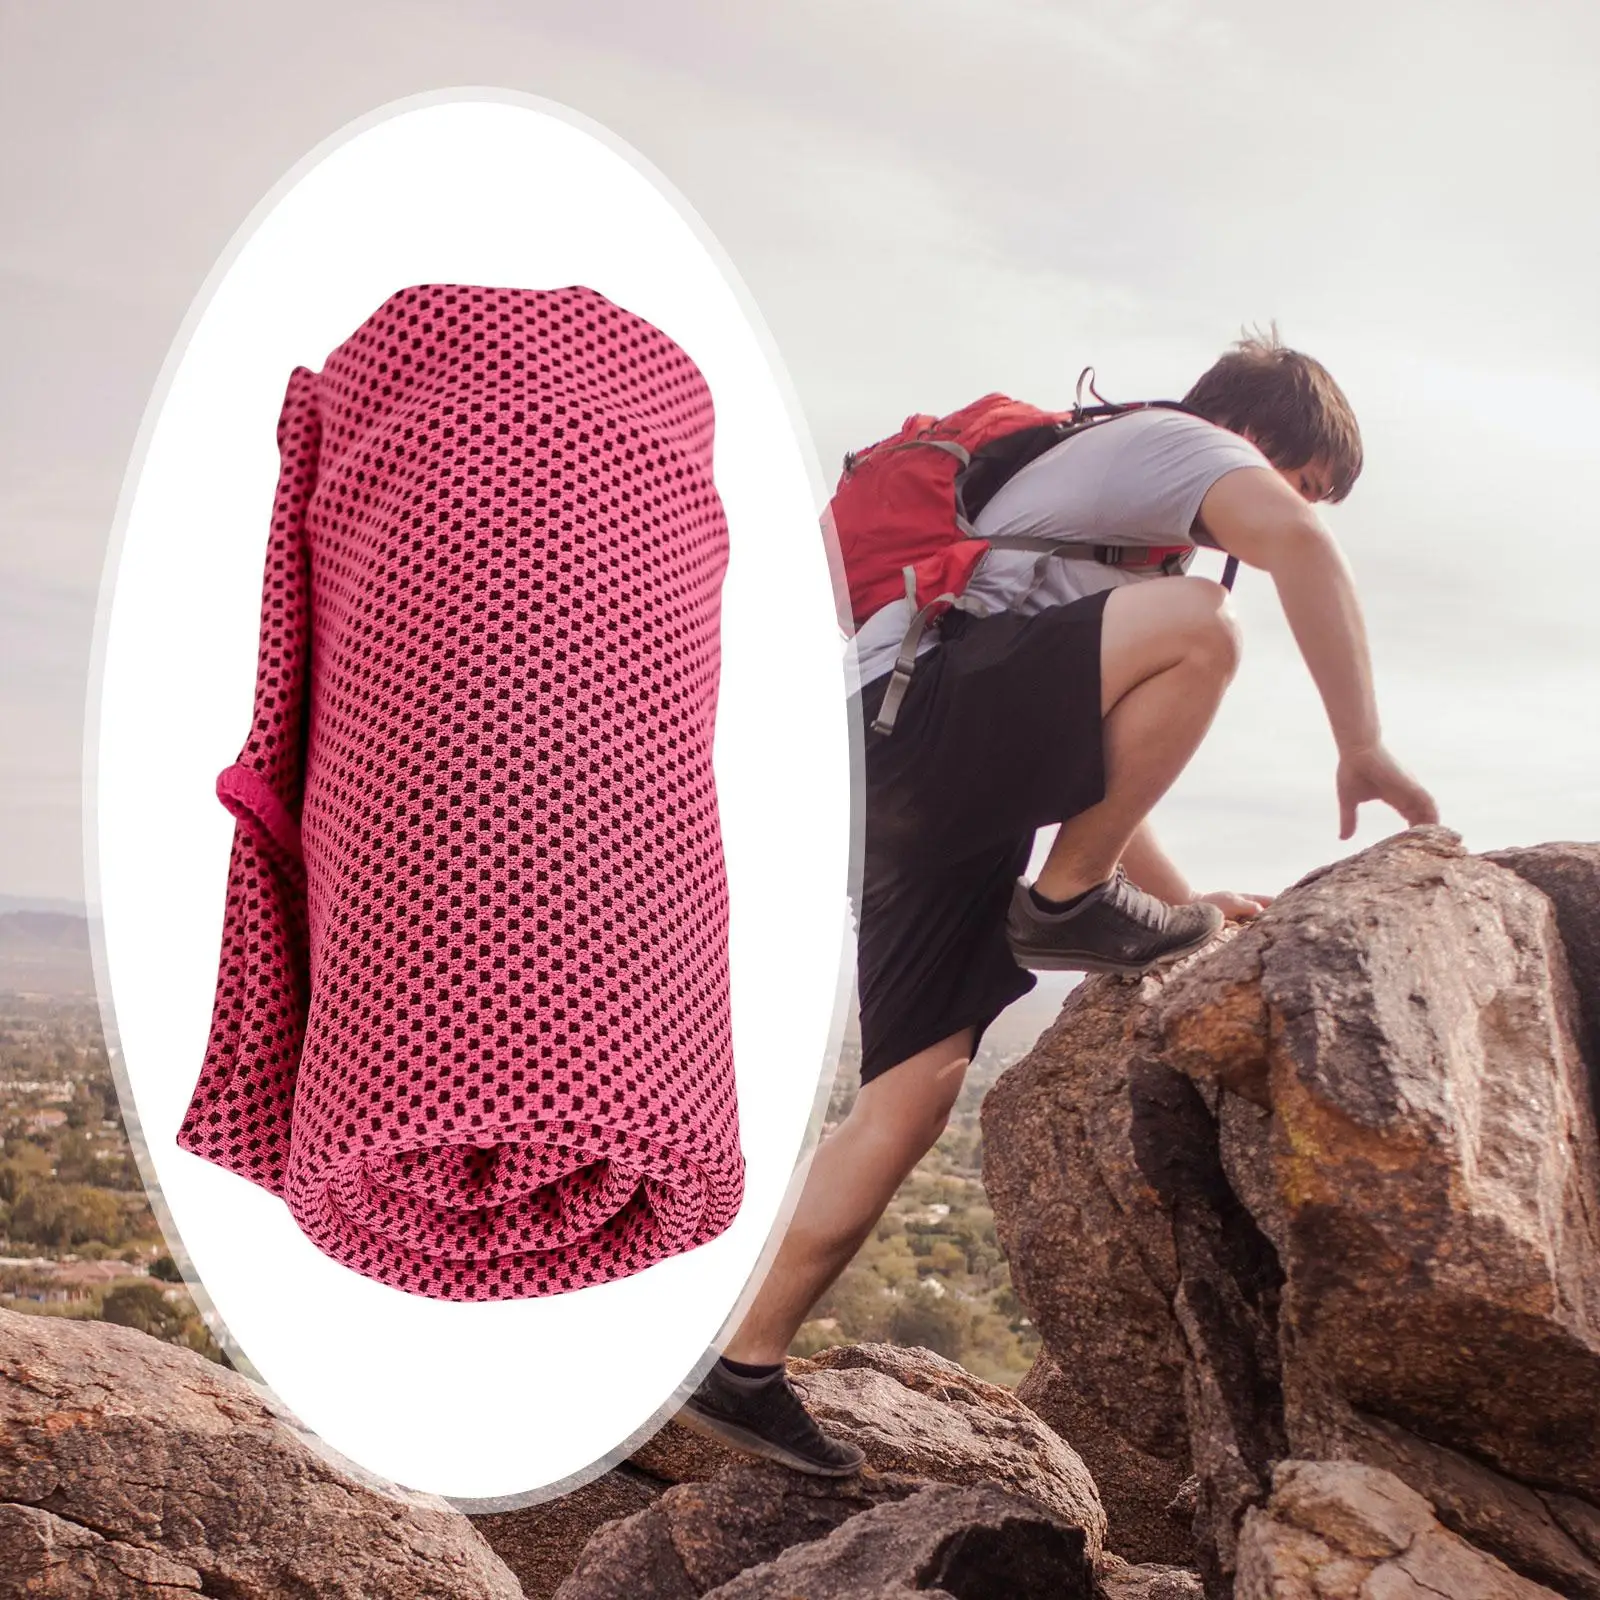 Gym Towel Sweat Absorbing Cool Towel for Outdoor Activities Jogging Swimming